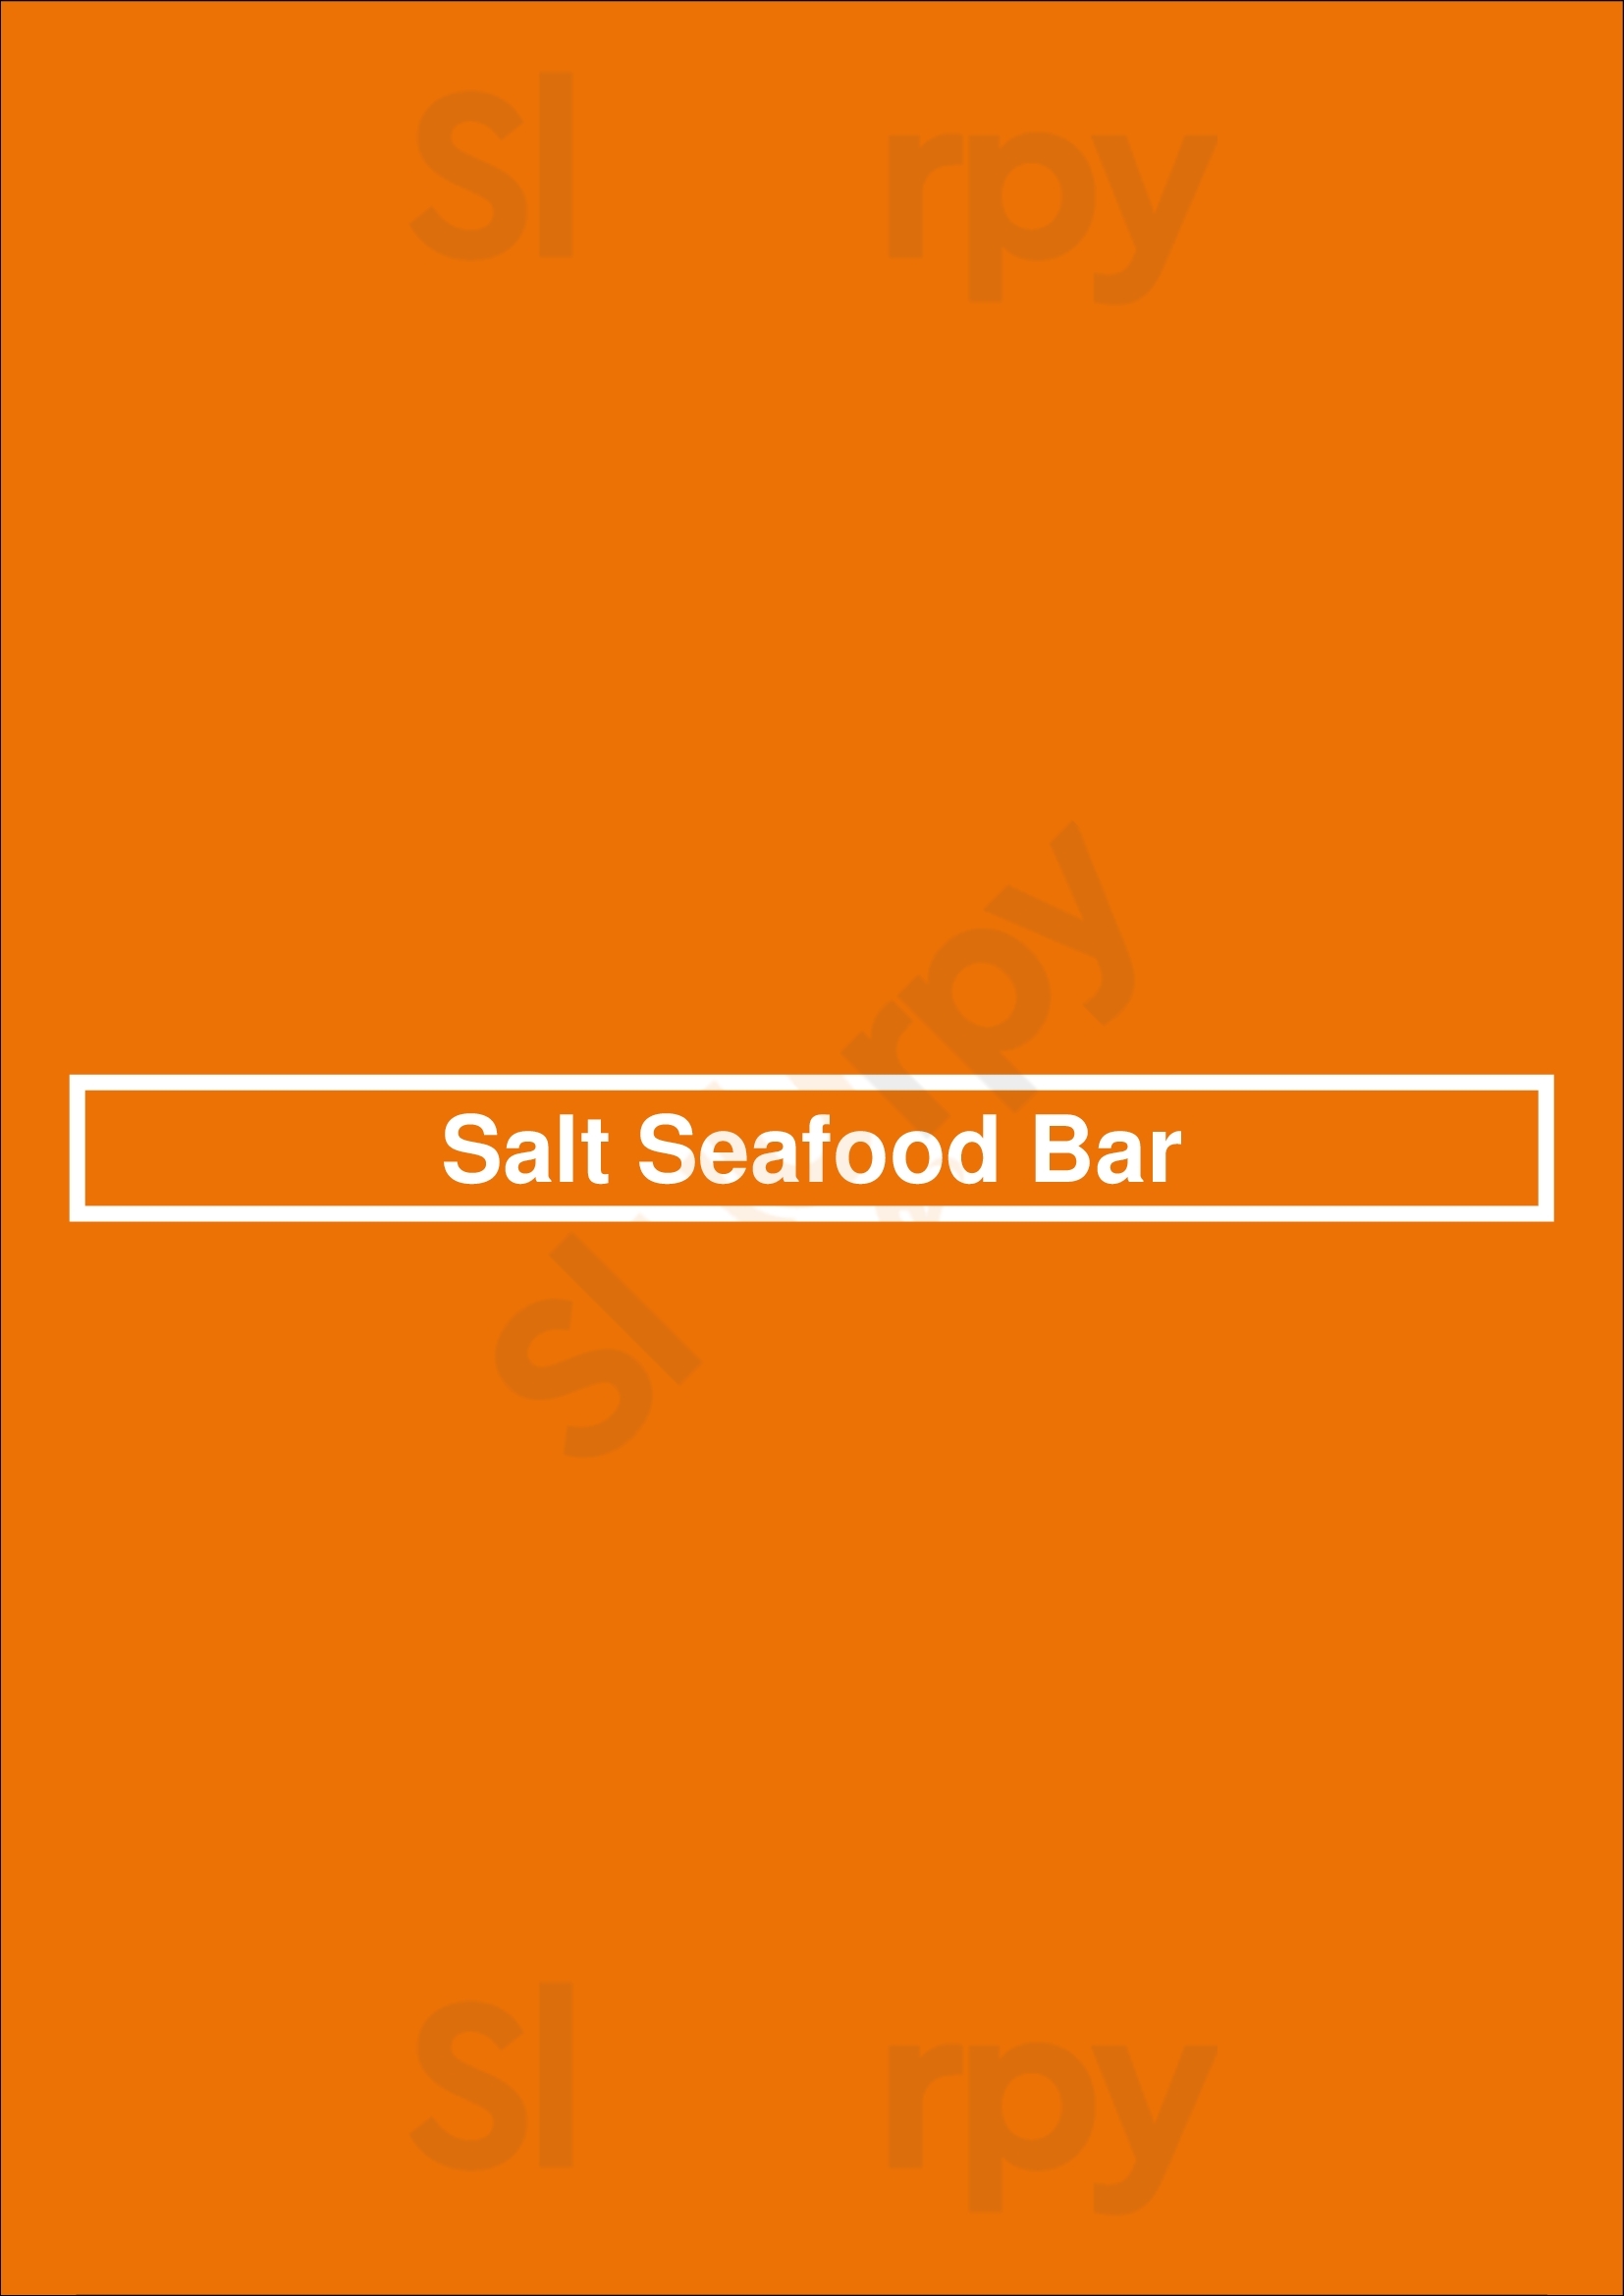 Salt Seafood Bar Oisterwijk Menu - 1